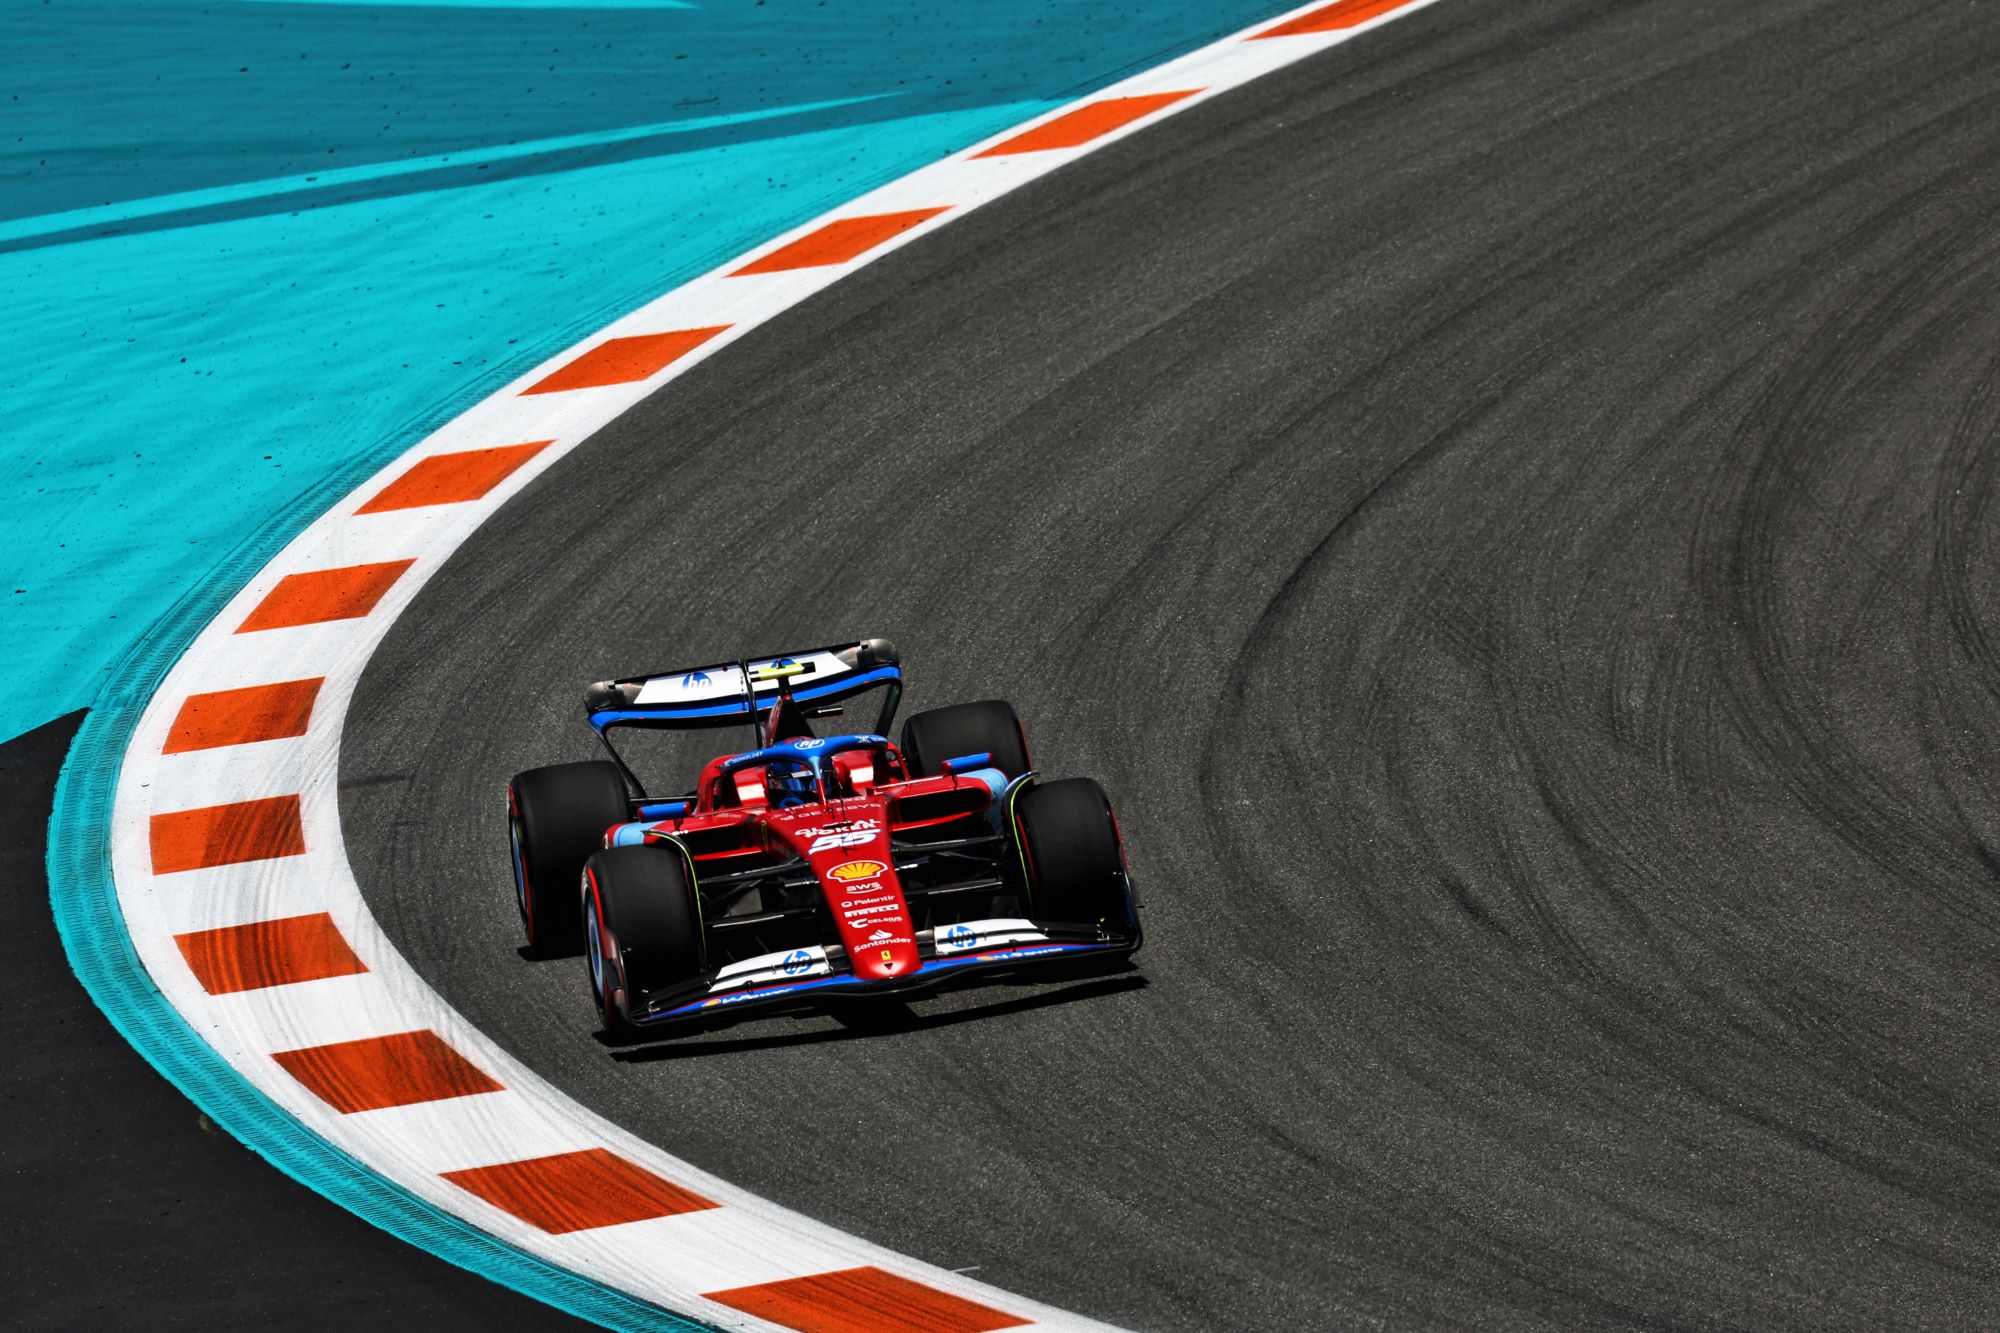 F1: Leclerc diz que formato da Sprint limitou ataque a Verstappen